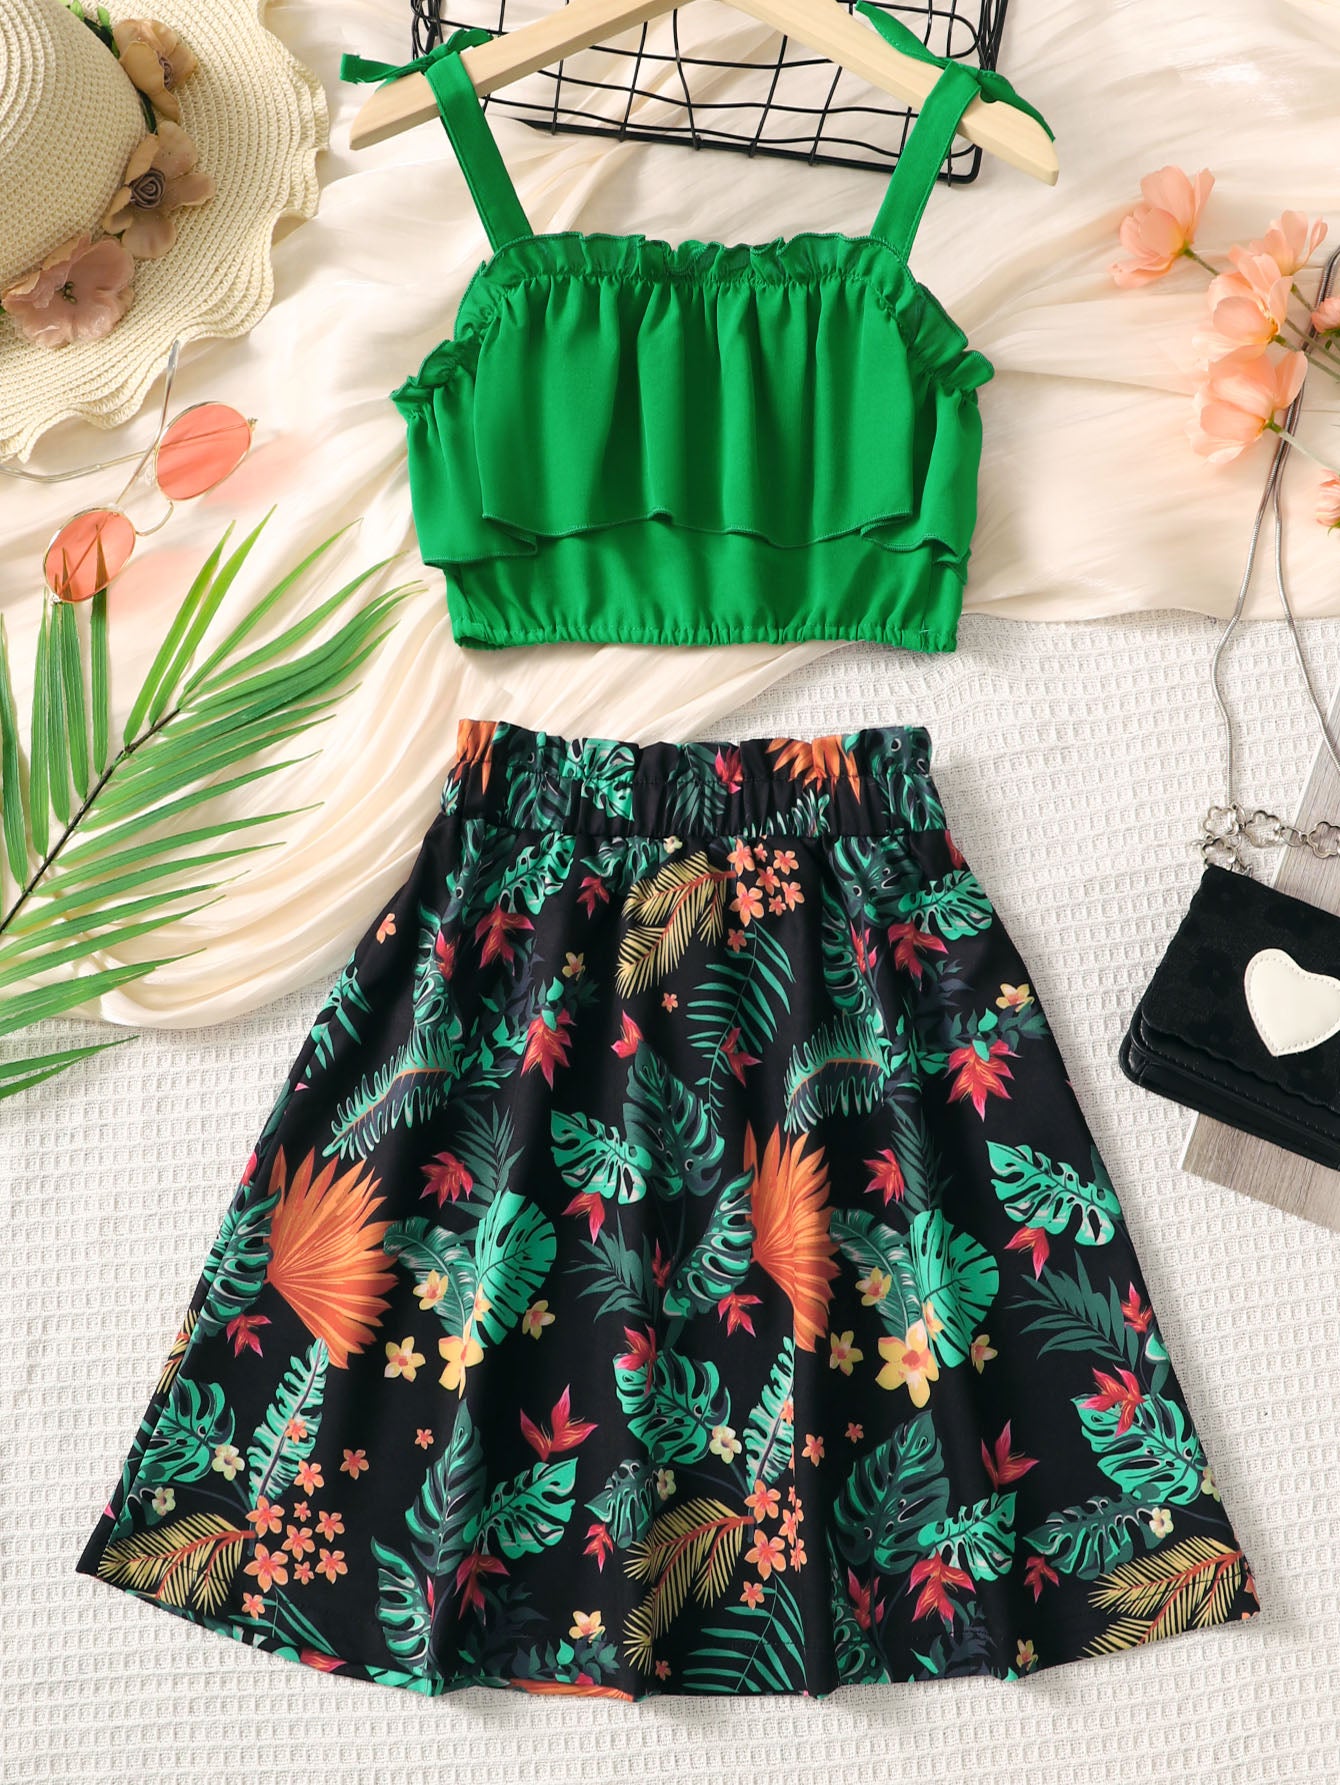 Uylee's Boutique レイヤードキャミと花柄スカートのセット